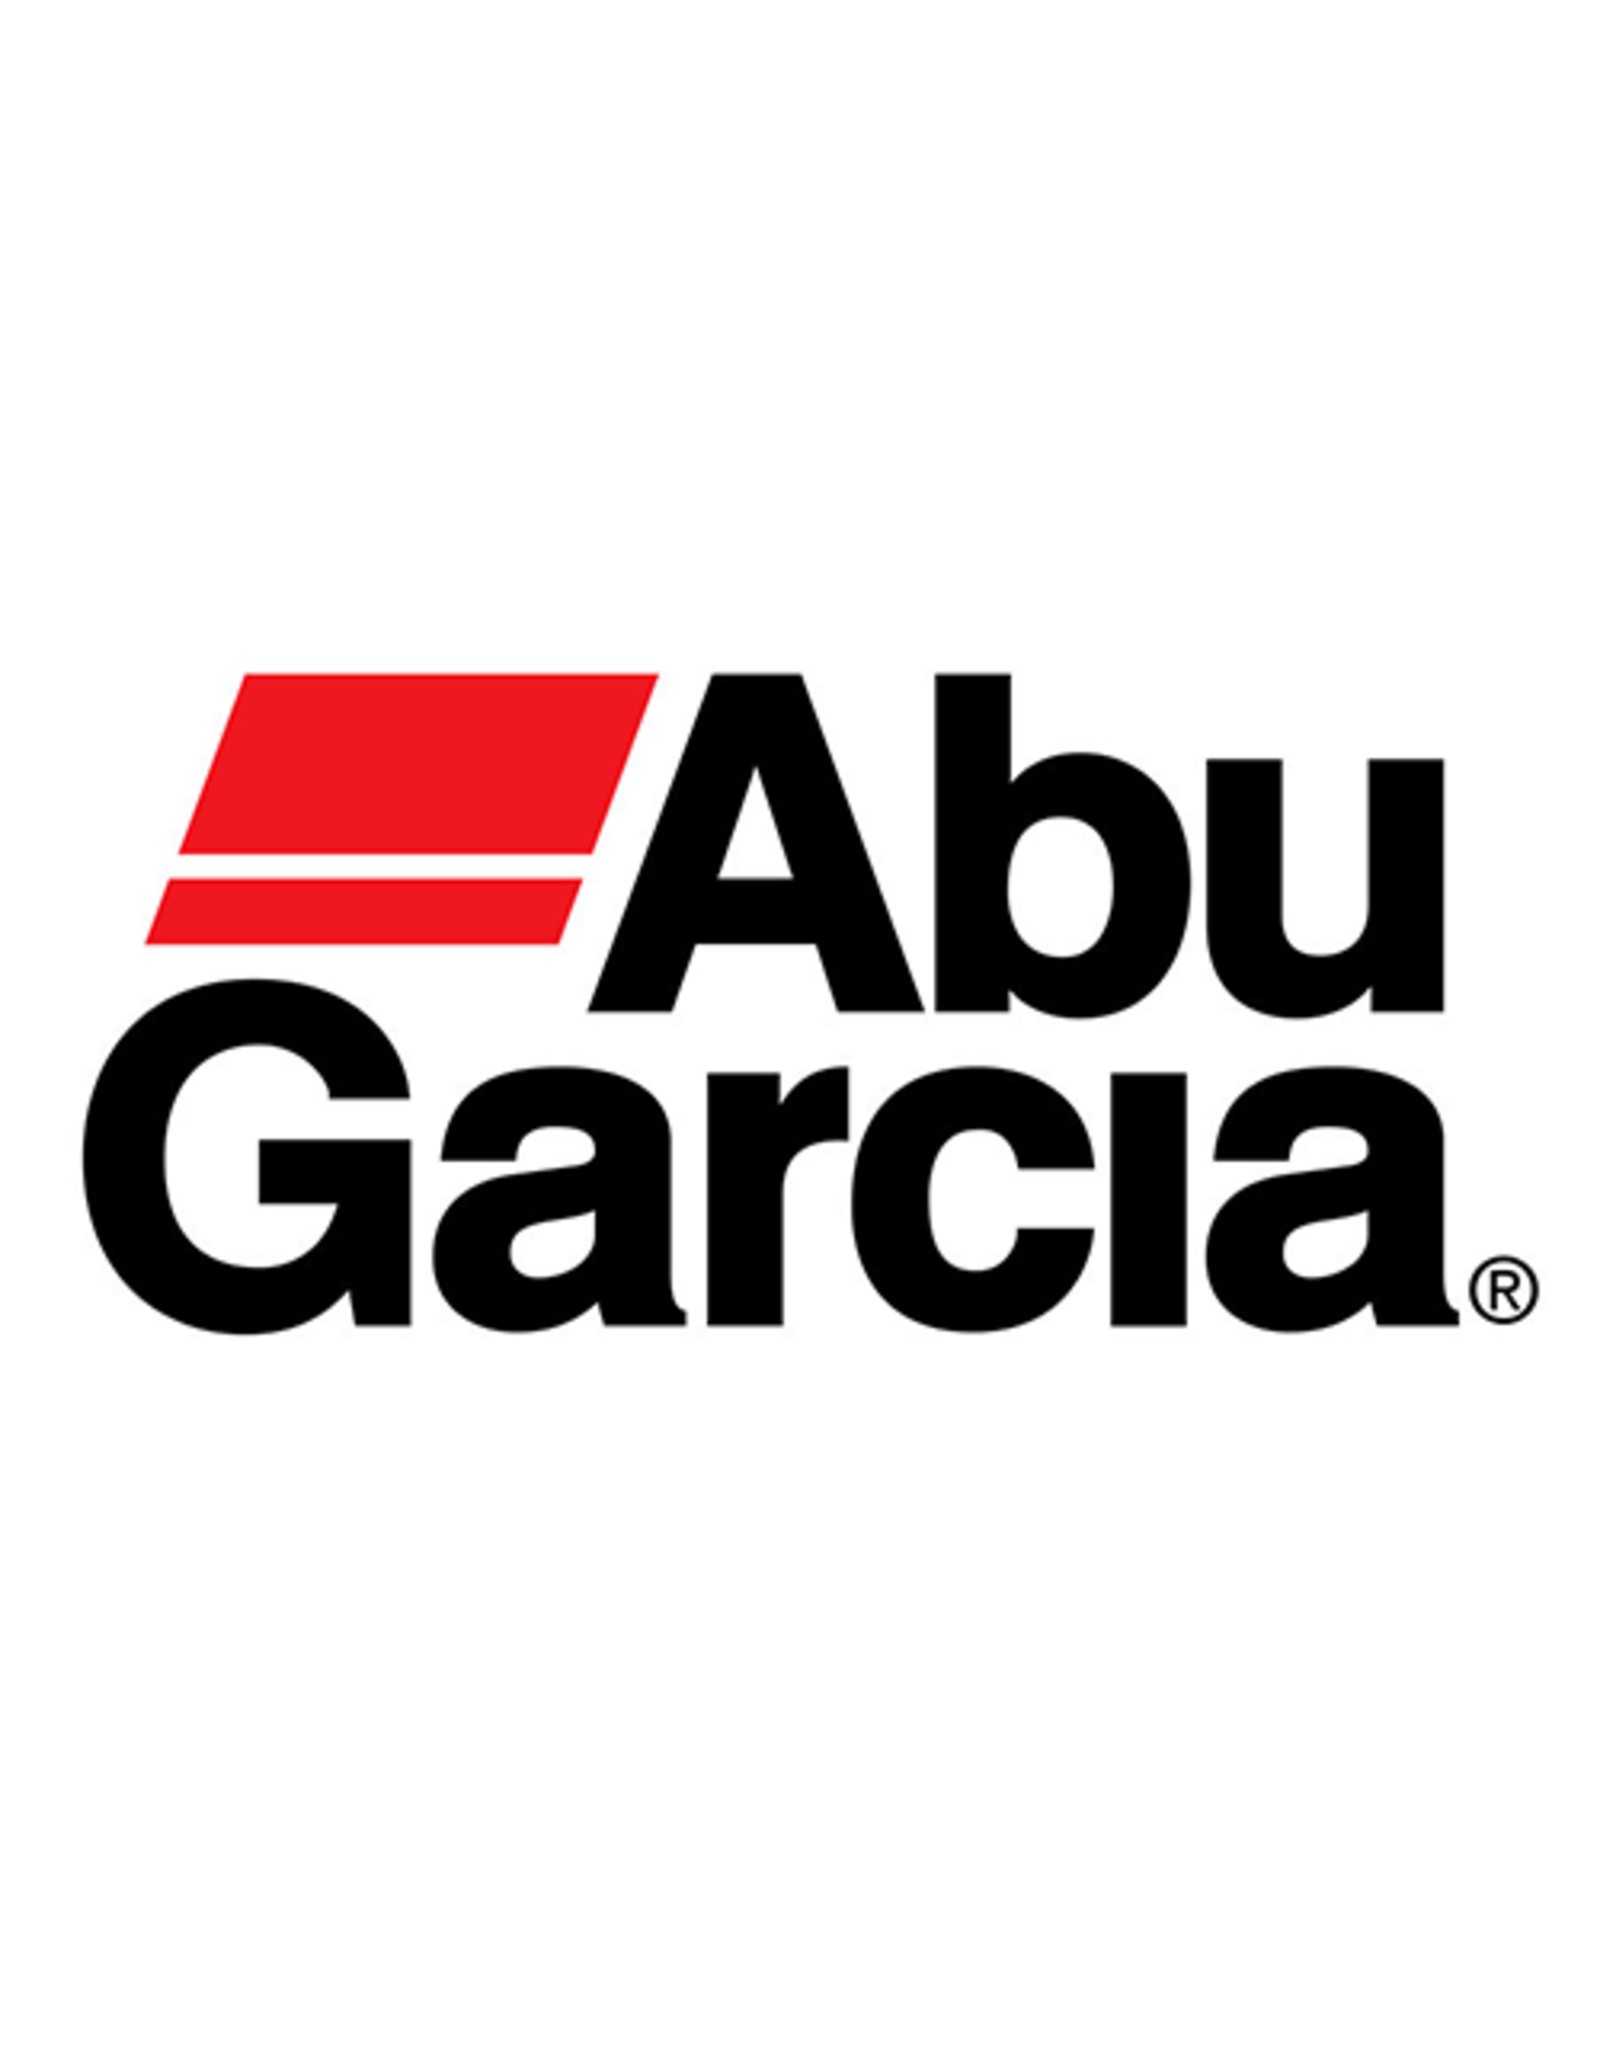 Abu Garcia 5224  CAST CONTROL CAP LEFT COMPLETE